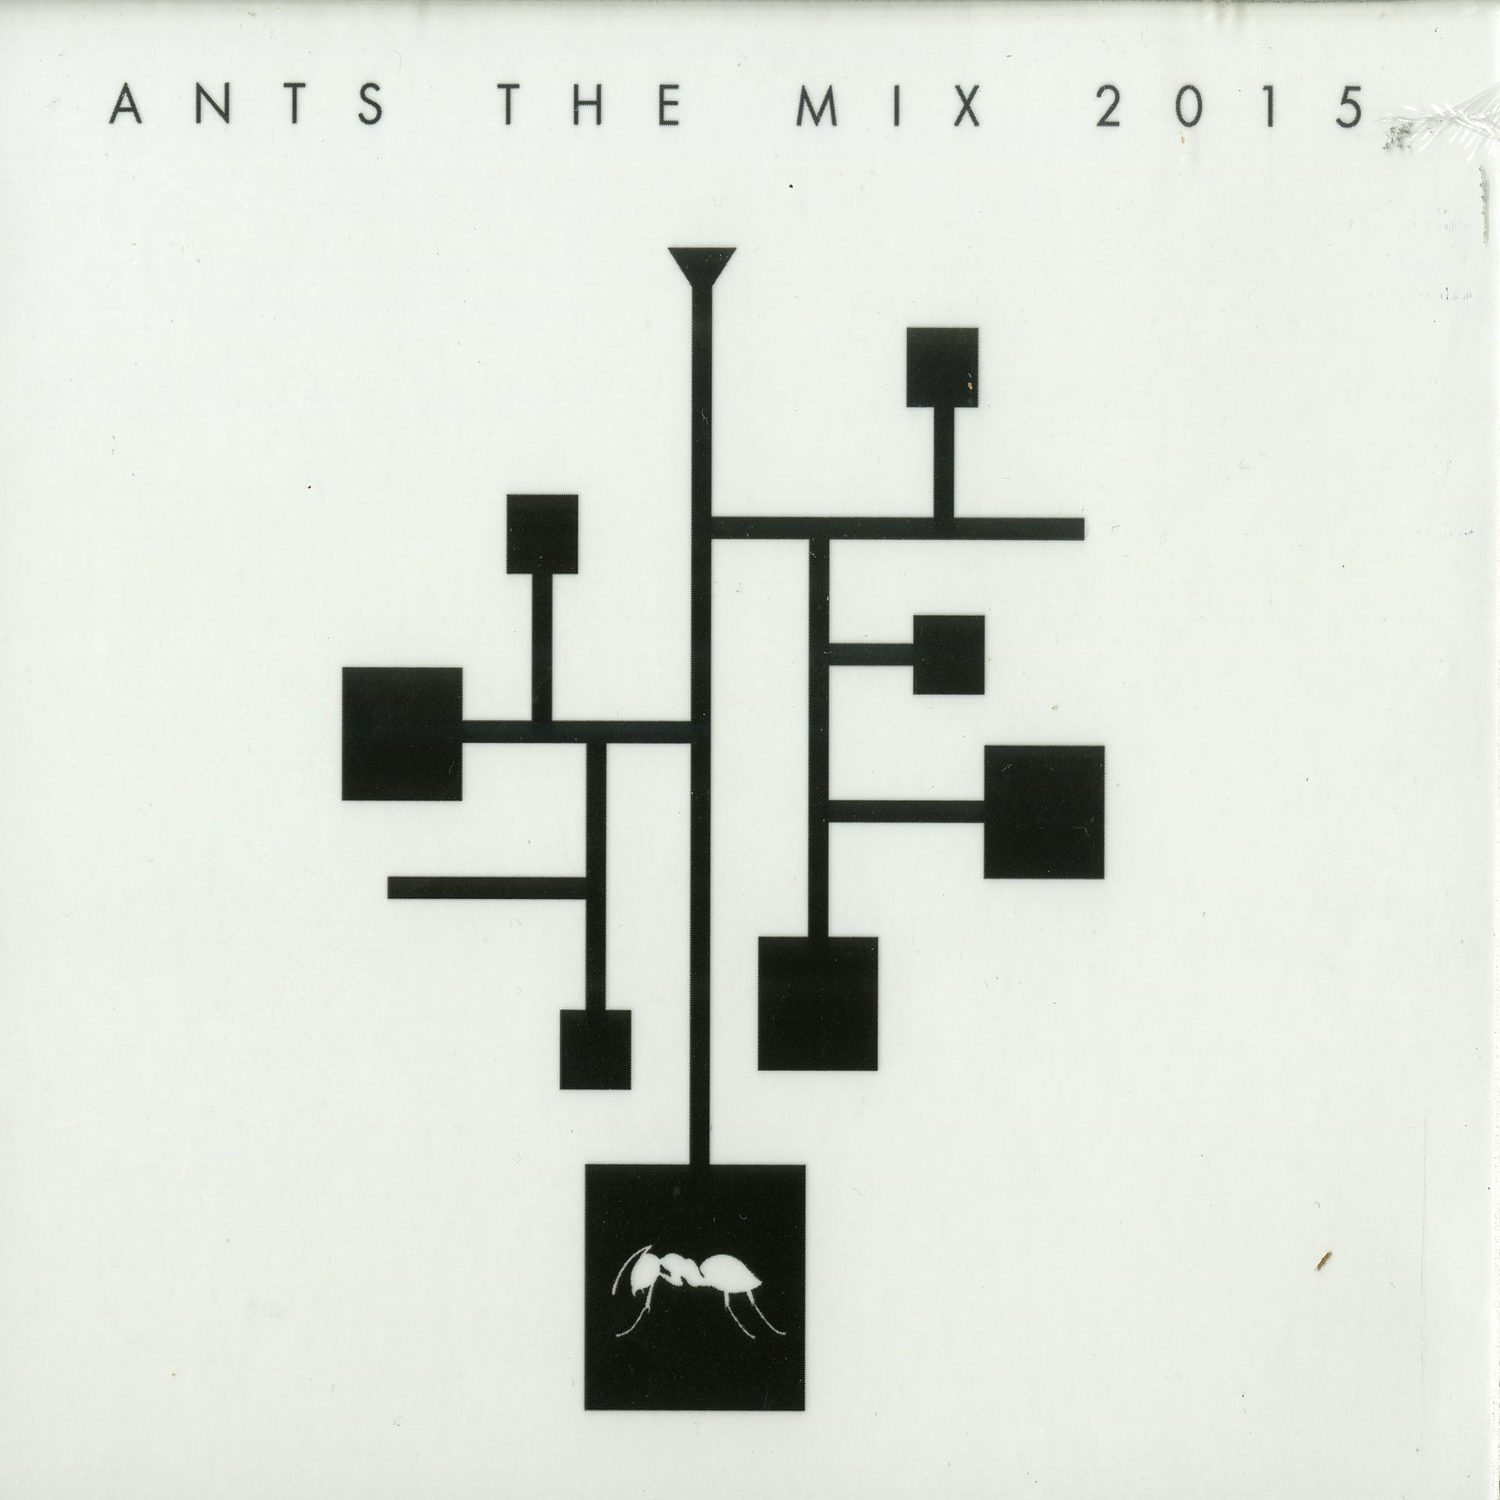 DJ Sneak - Tapesh - Los Suruba - ANTS THE MIX 2015 